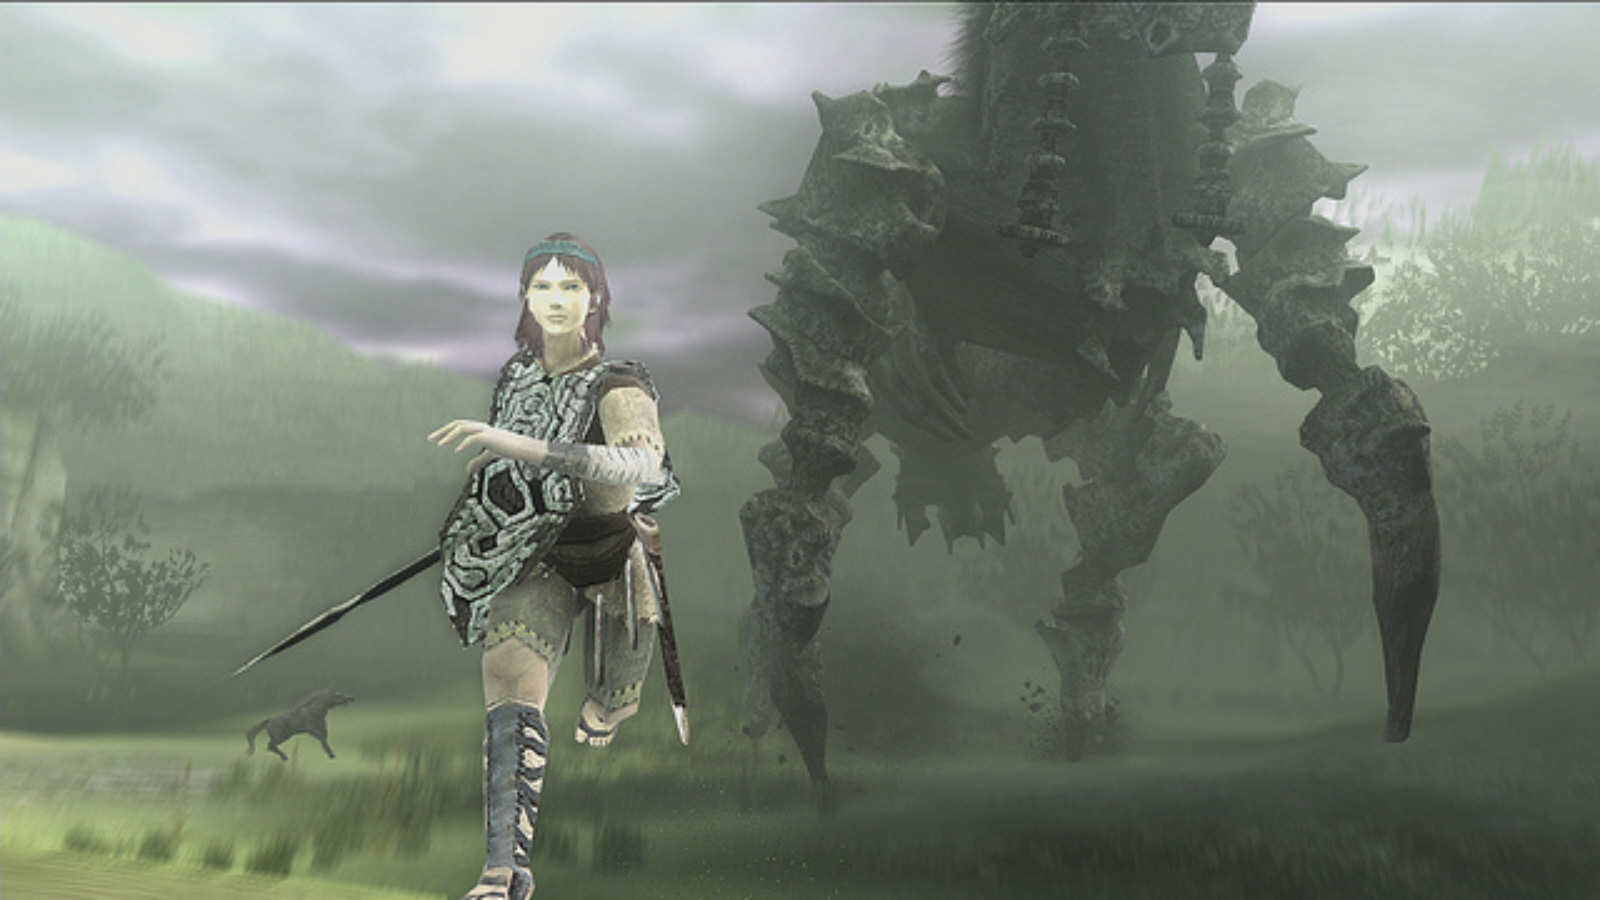 PS2 Colossus with Wanda & ICO 2 game set Japan 